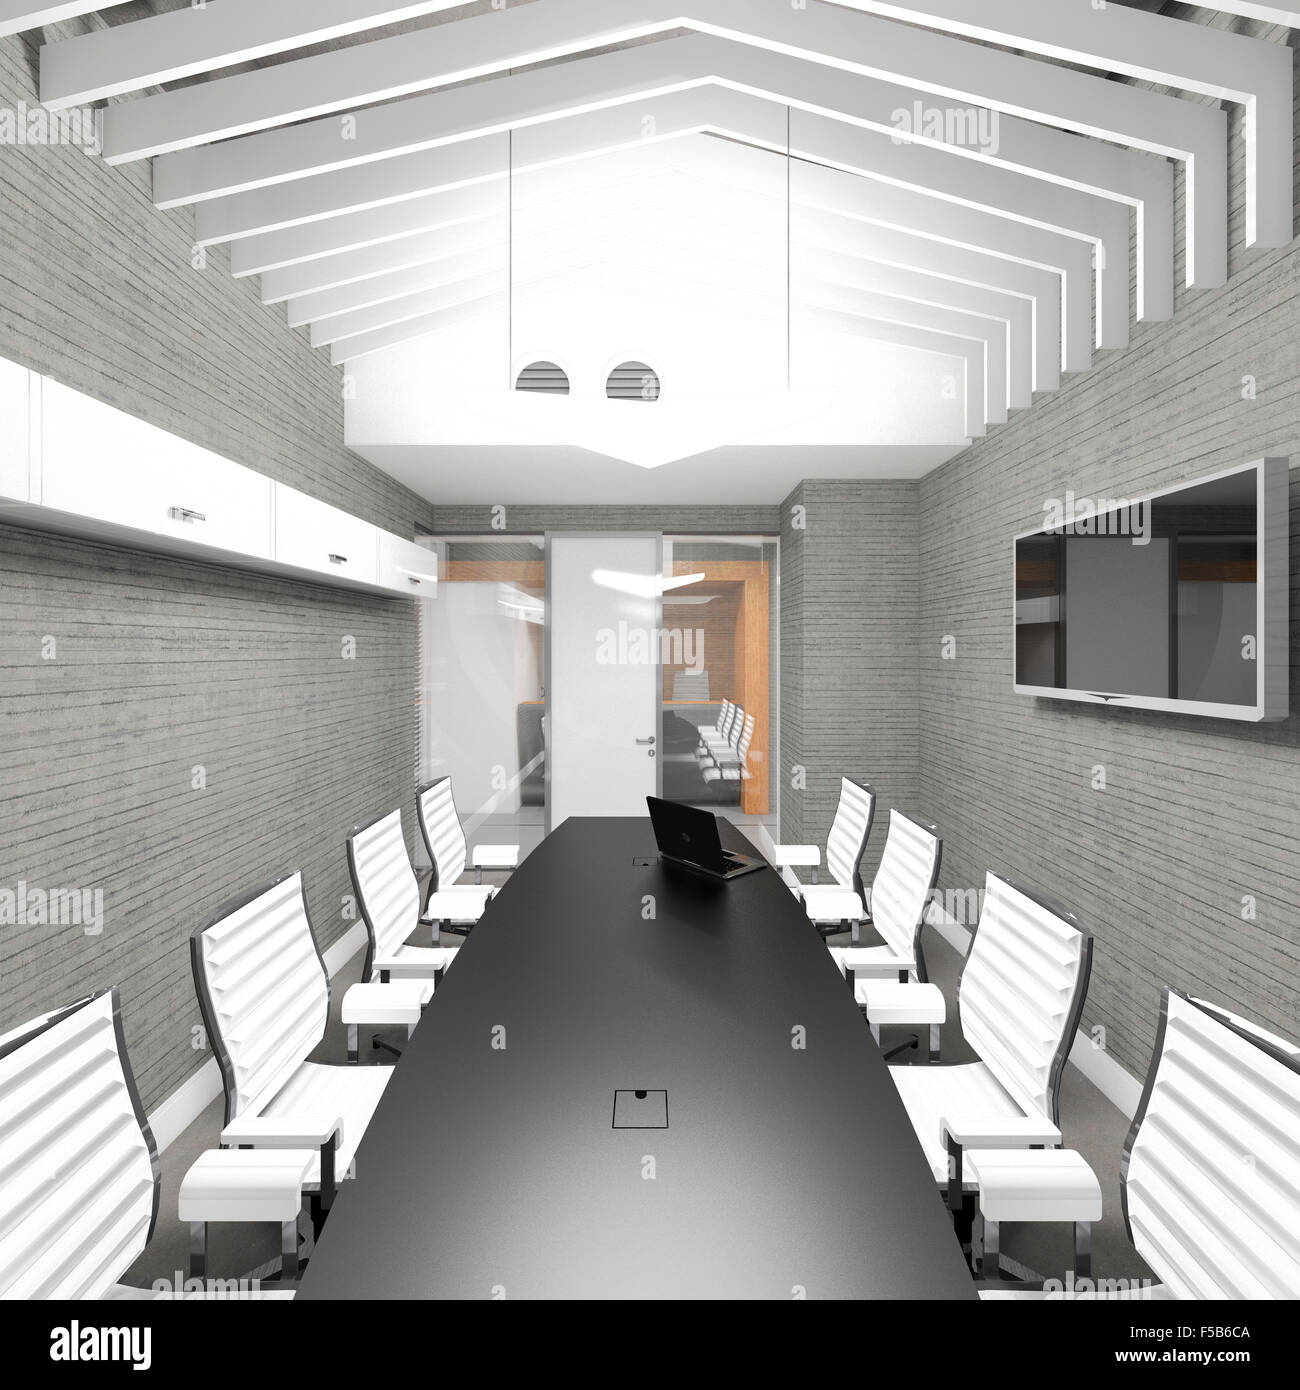 Empty modern office interior meeting room visualization Stock Photo